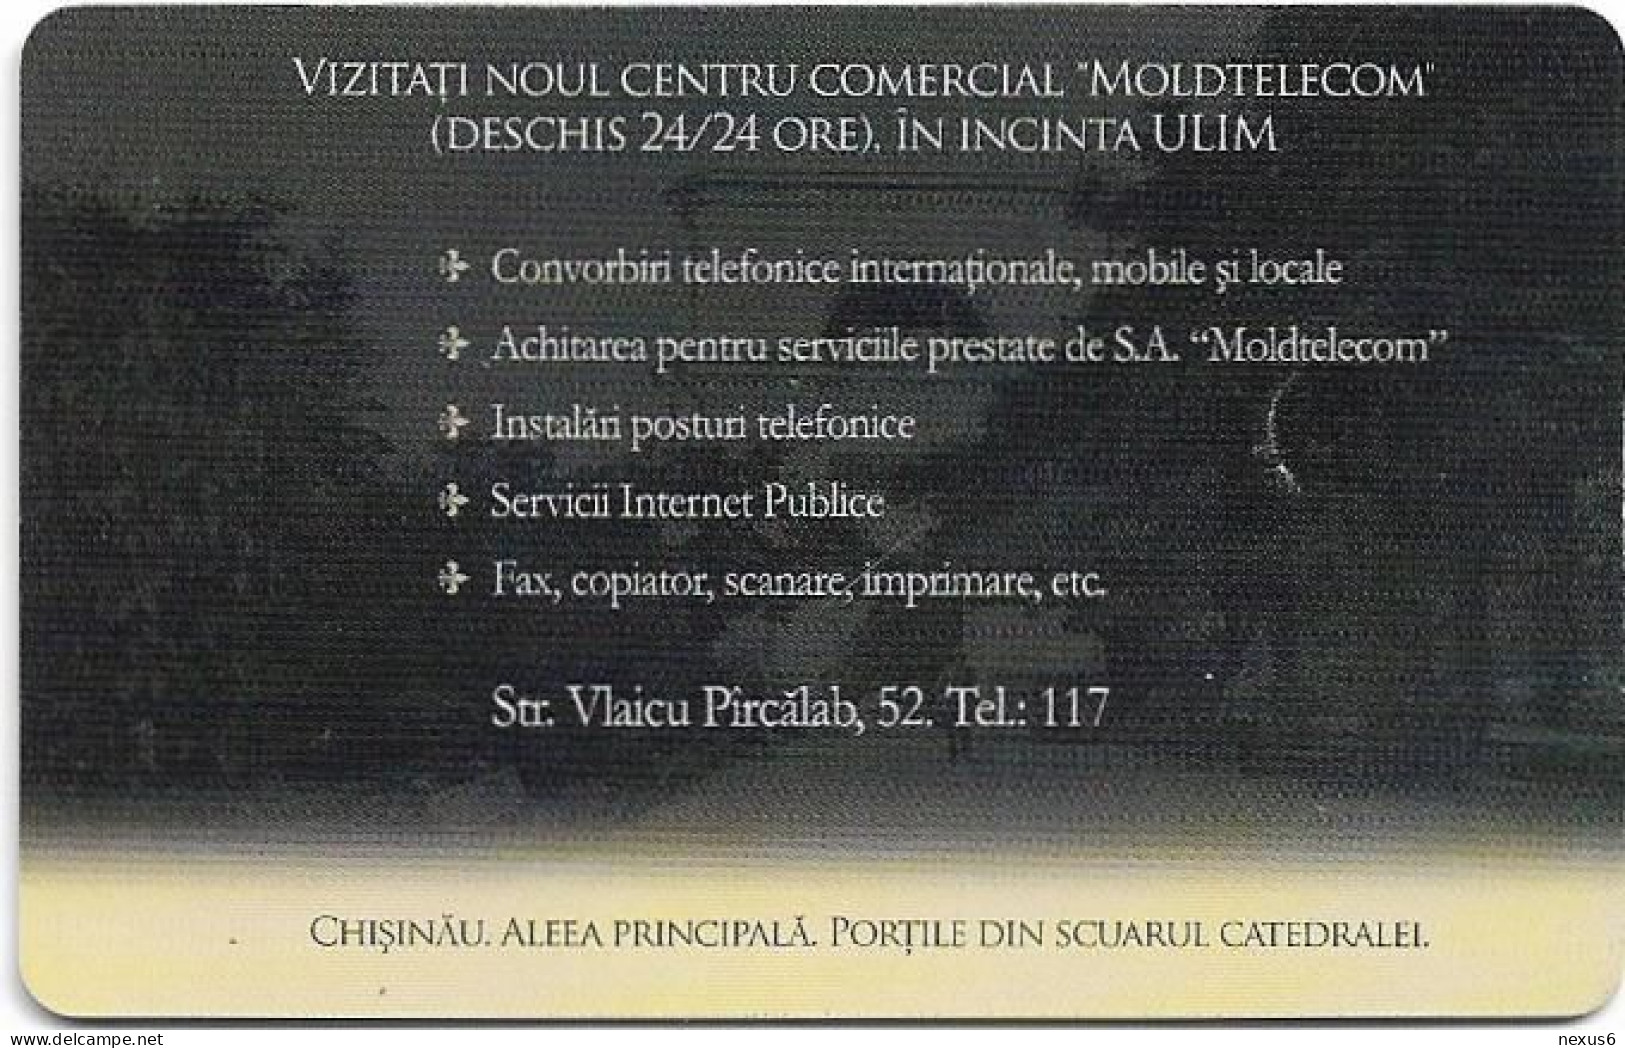 Moldova - Moldtelecom - Chisinau, Aleea Principala, Chip CHT08, 09.2005, 100U, 15.603ex, Used - Moldavie